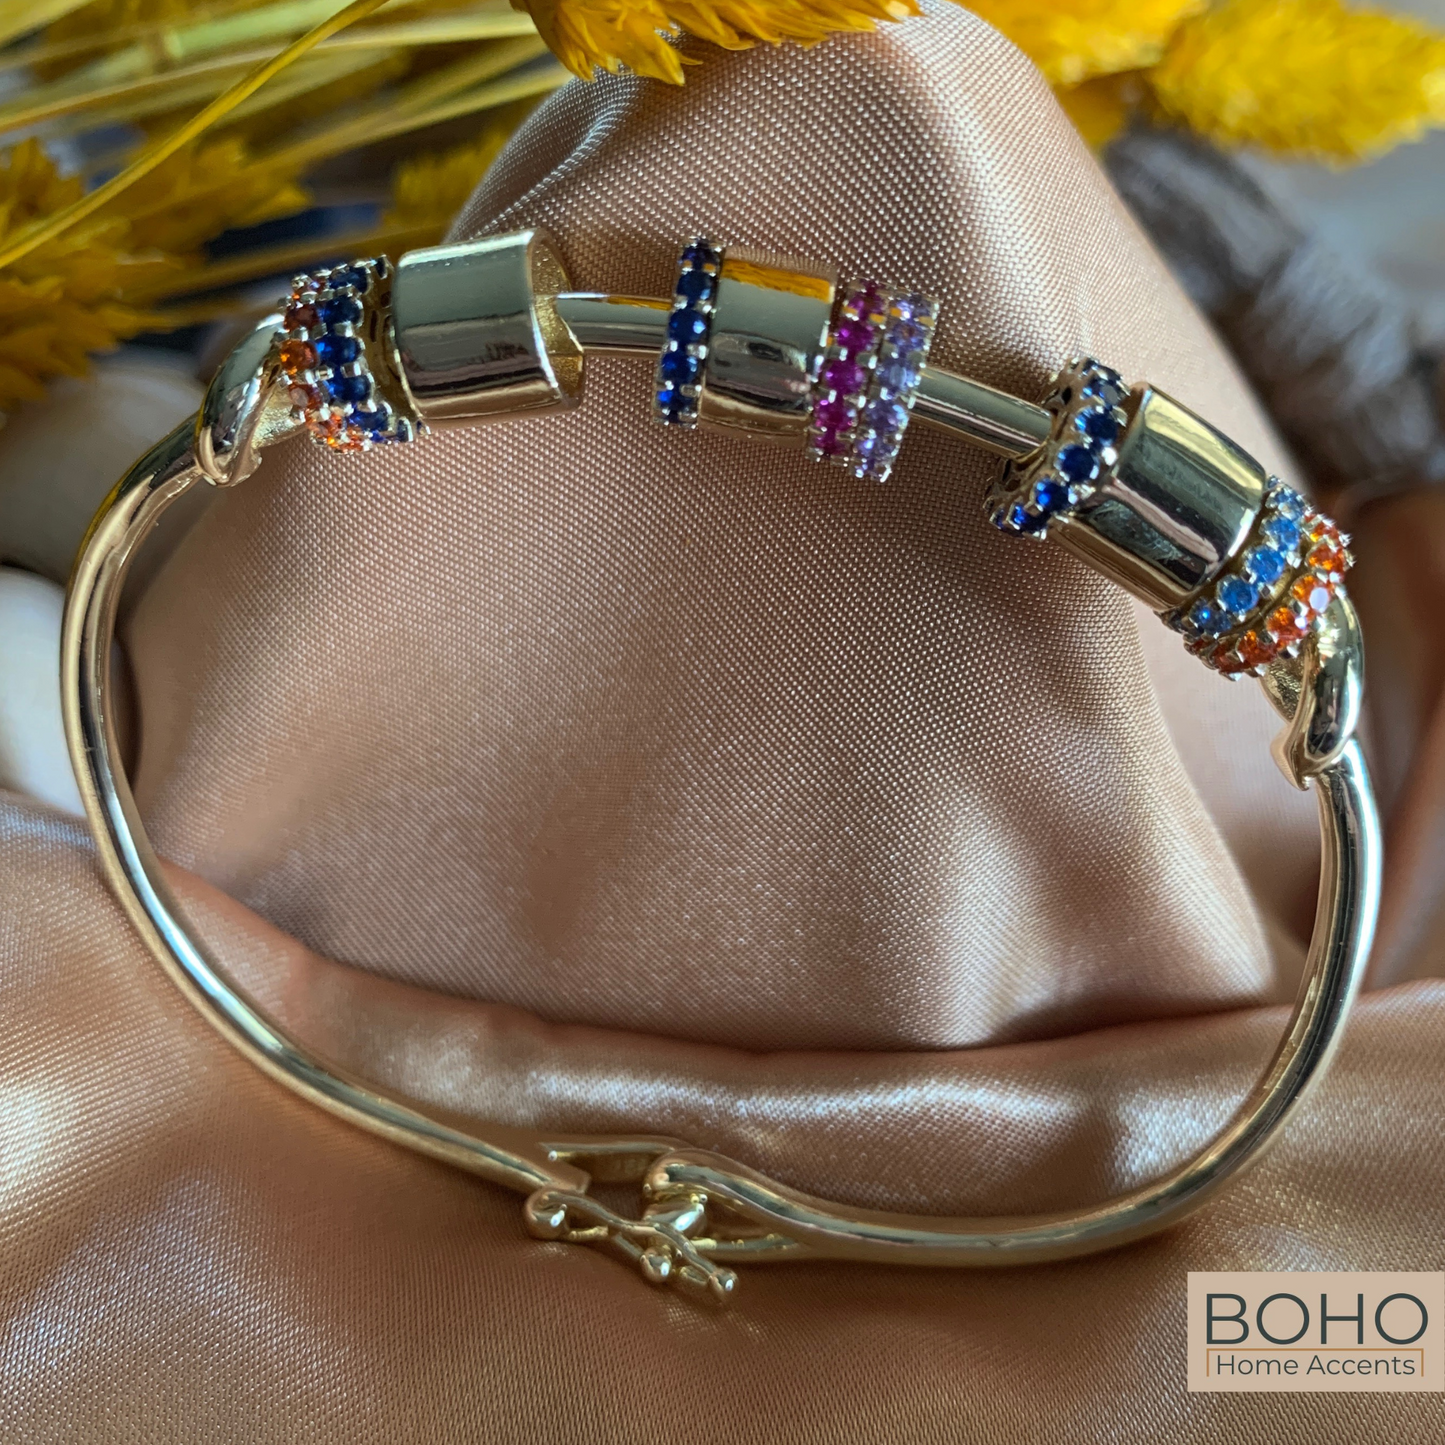 Free-spirited Bracelet - gold stainless steel bracelet, Zircon, pulsera oro plateado, Size 6.5-7 inch | Boho Home Accents